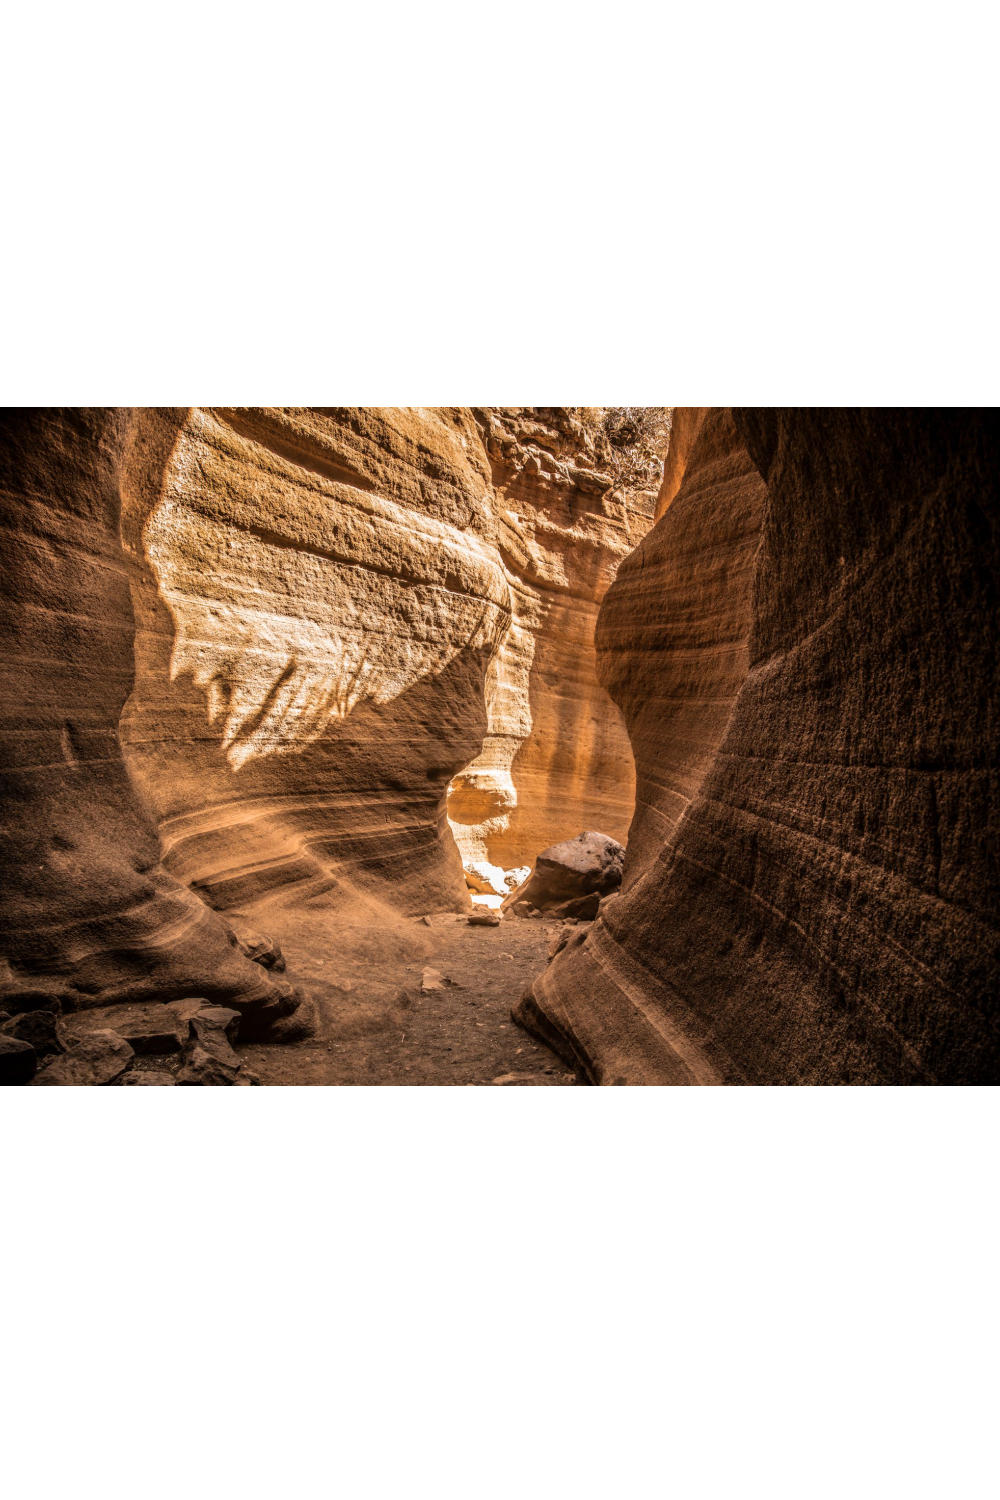 Sandstones Photographic Artwork | Andrew Martin Slot Canyon | Oroa.com